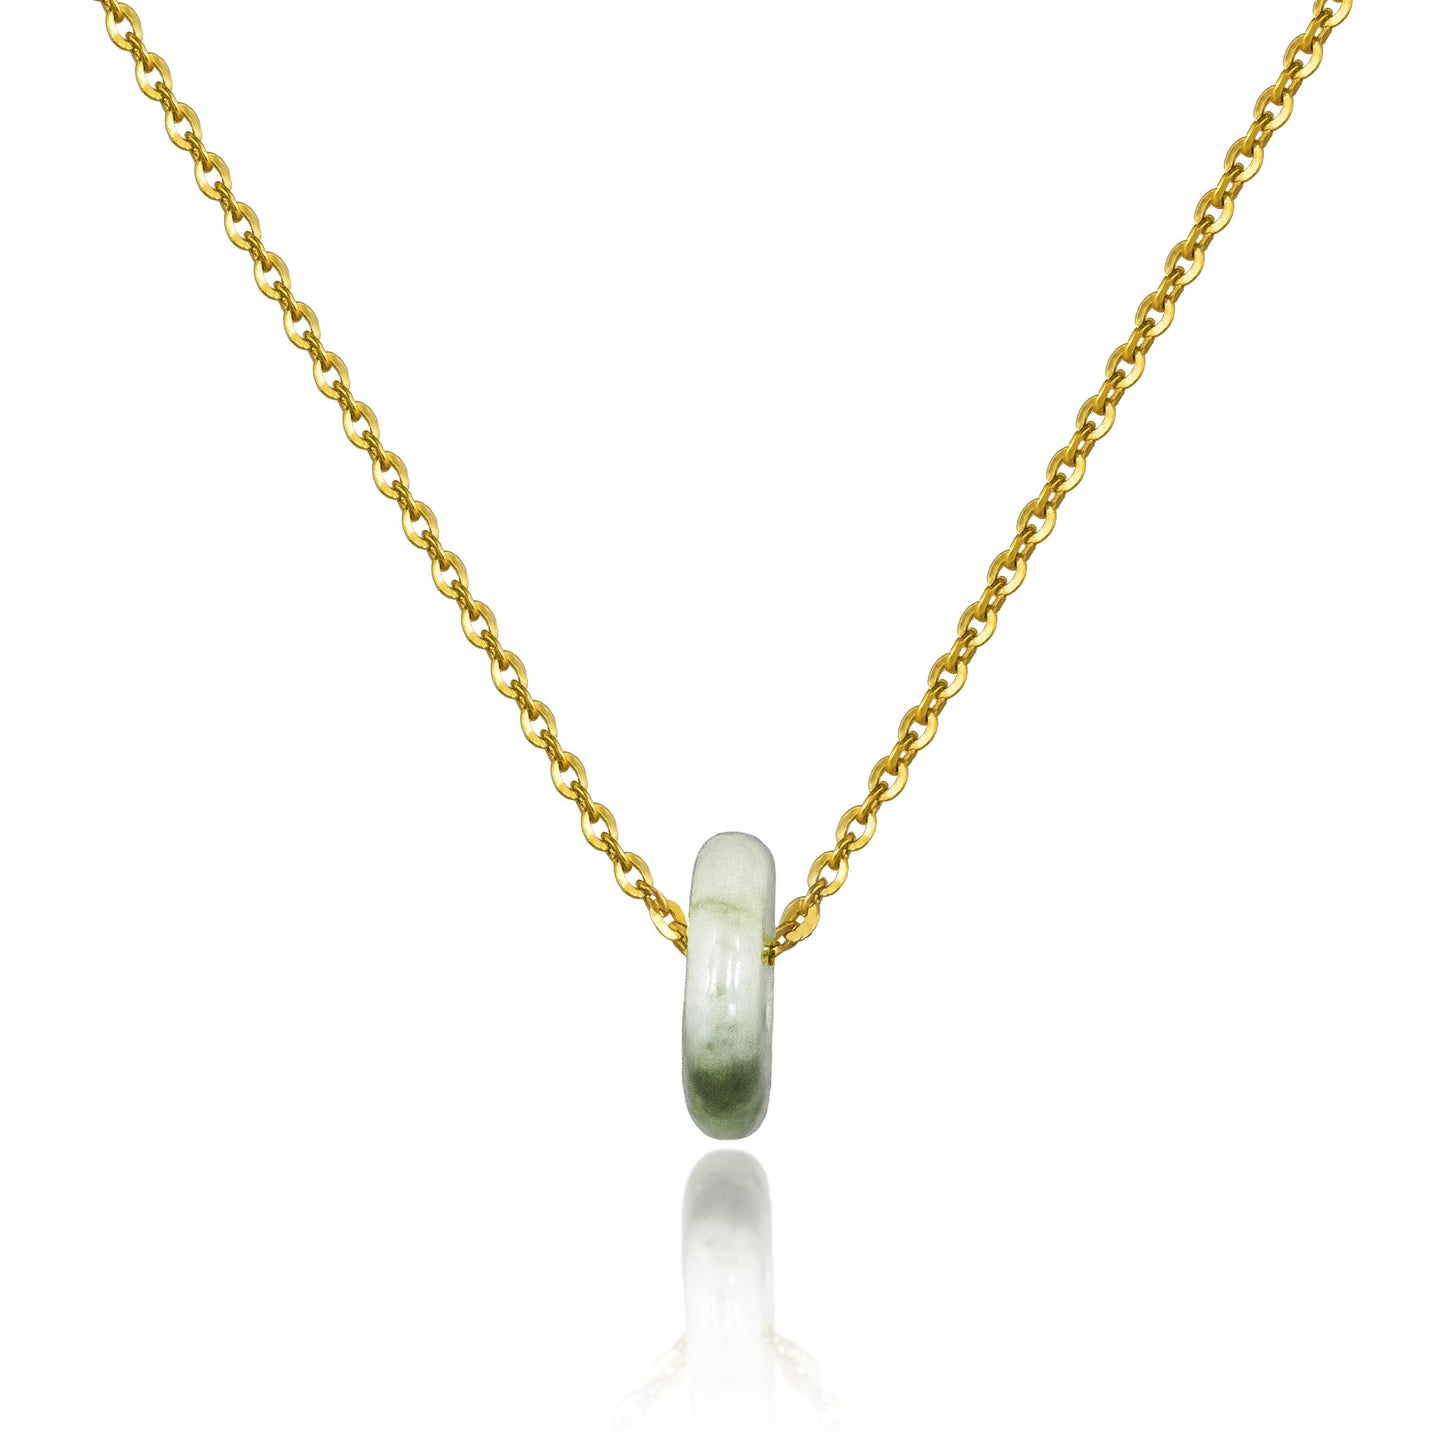 Senyda 10K Solid Gold Jade Donut Charm Necklace